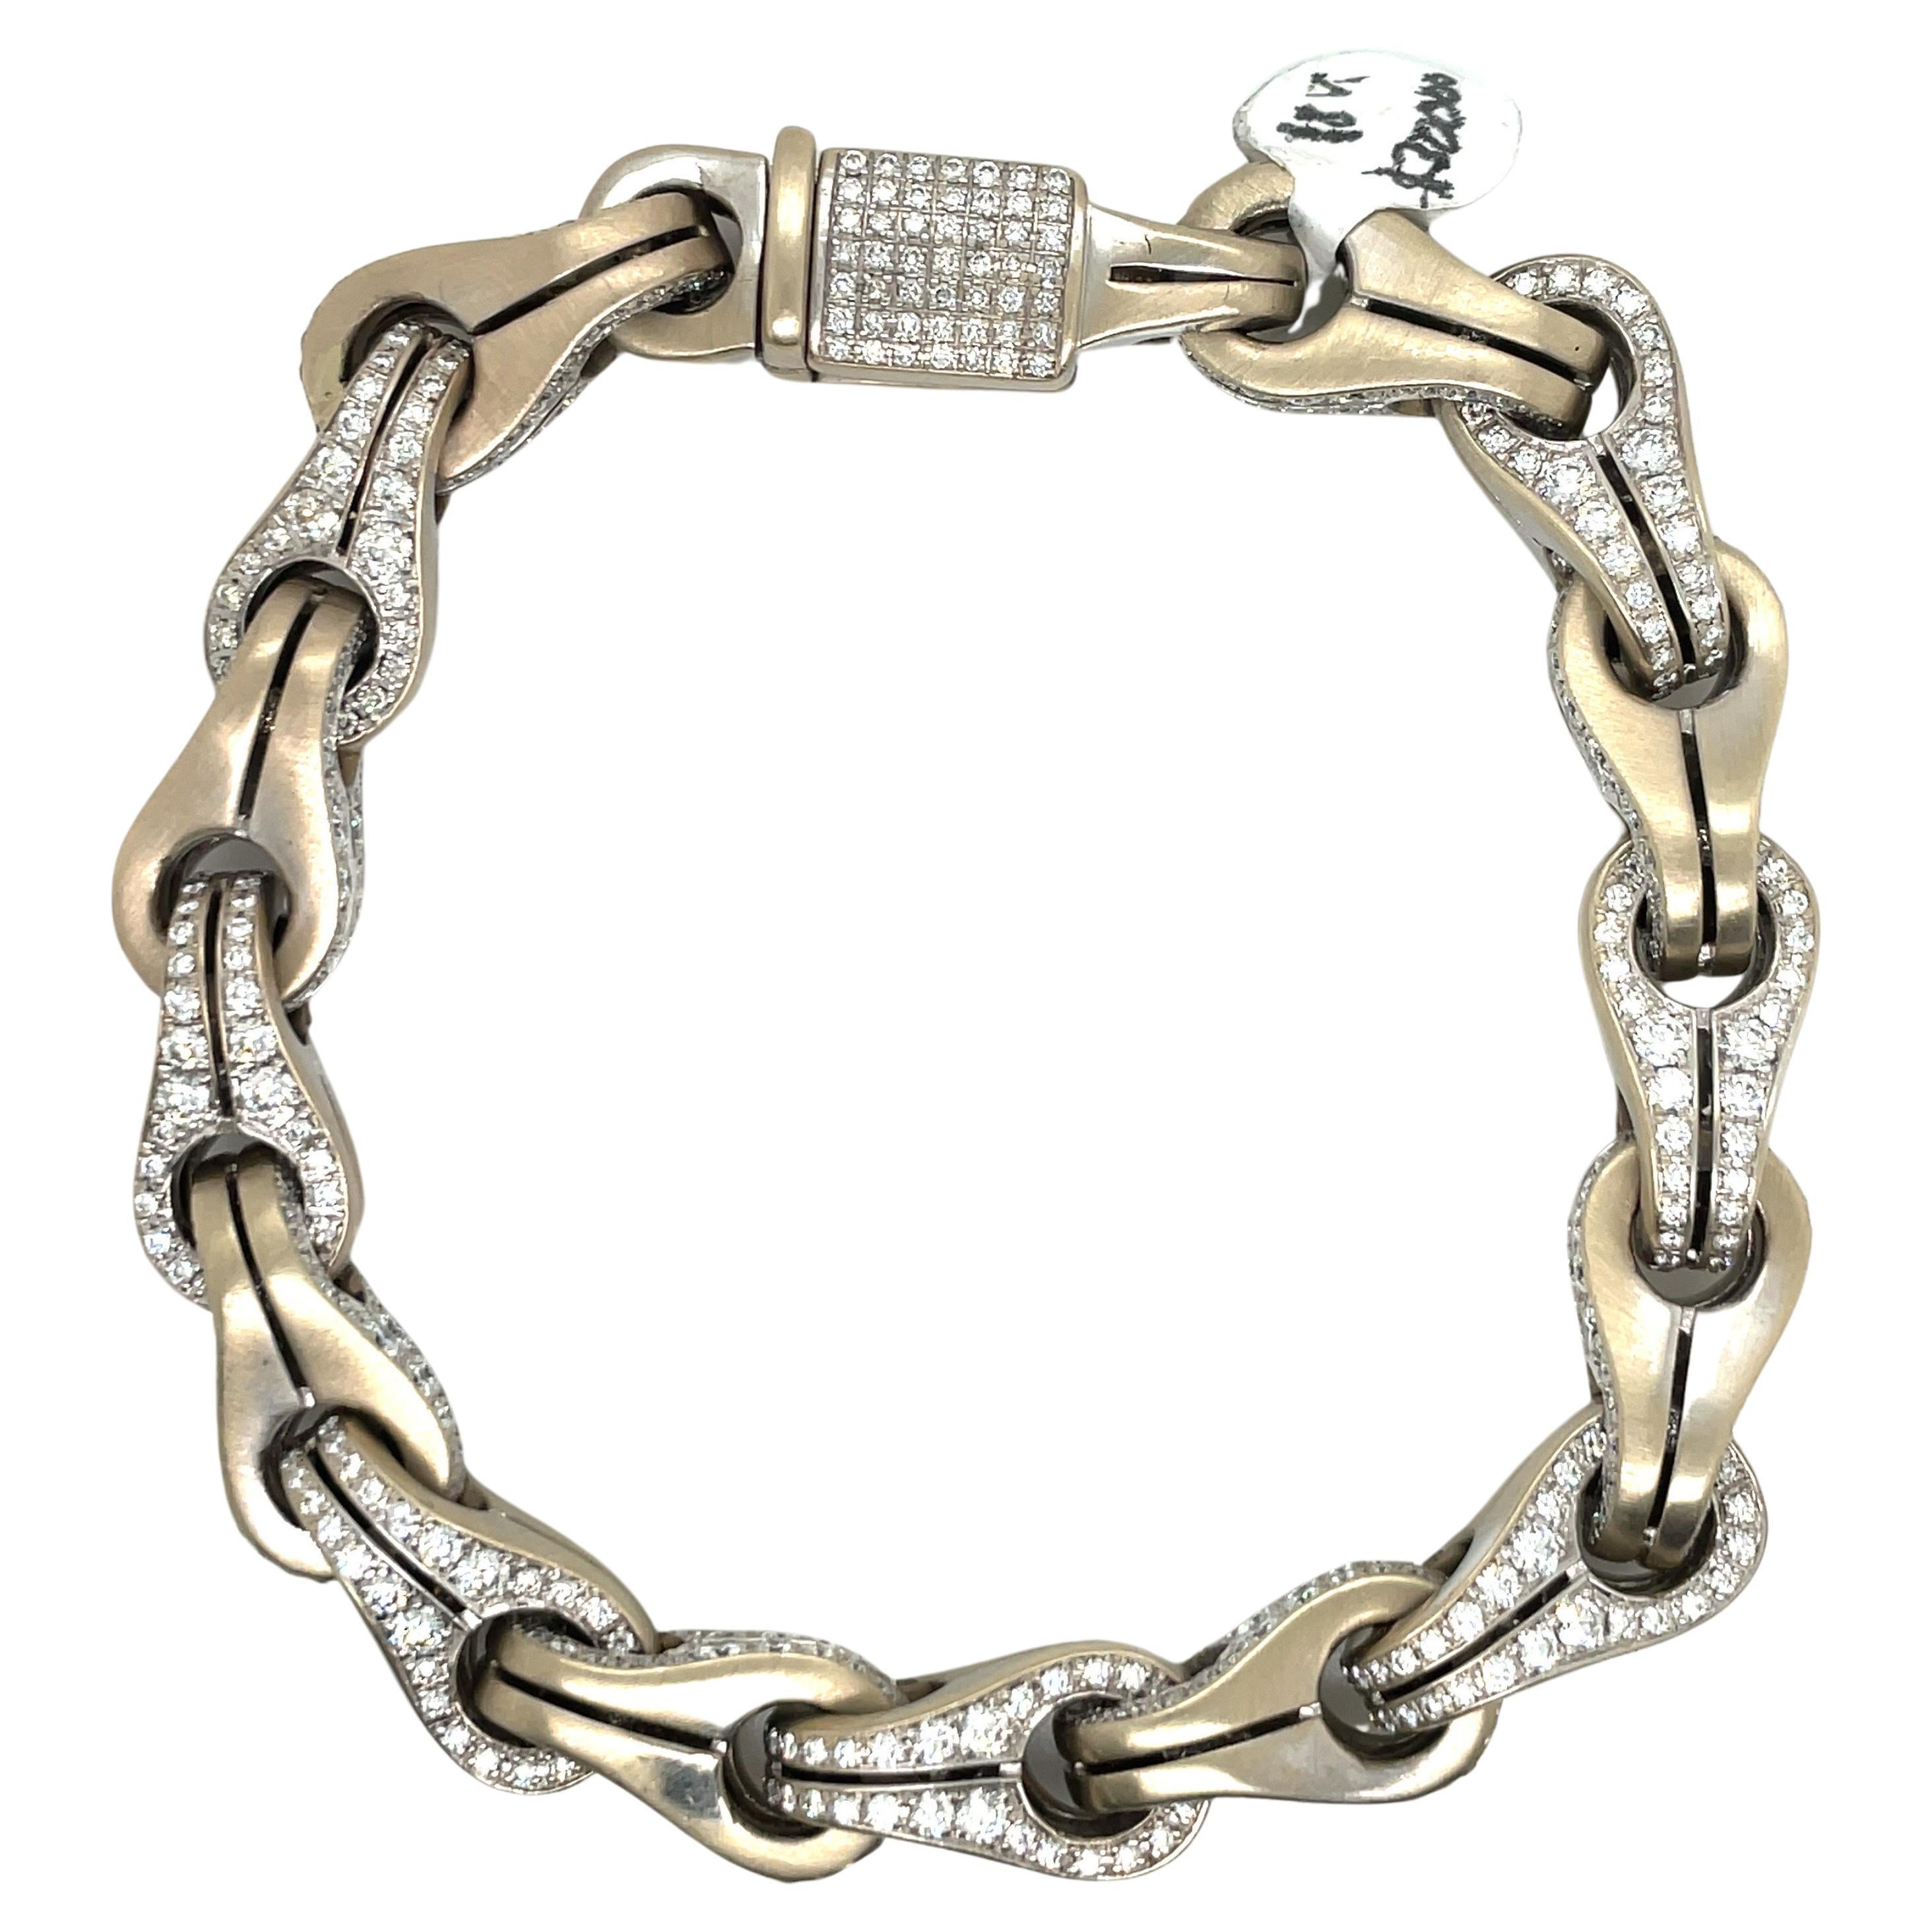 Di Modolo Fiamma Collection 18 Karat White Gold Diamond Link Bracelet 13 Carats For Sale